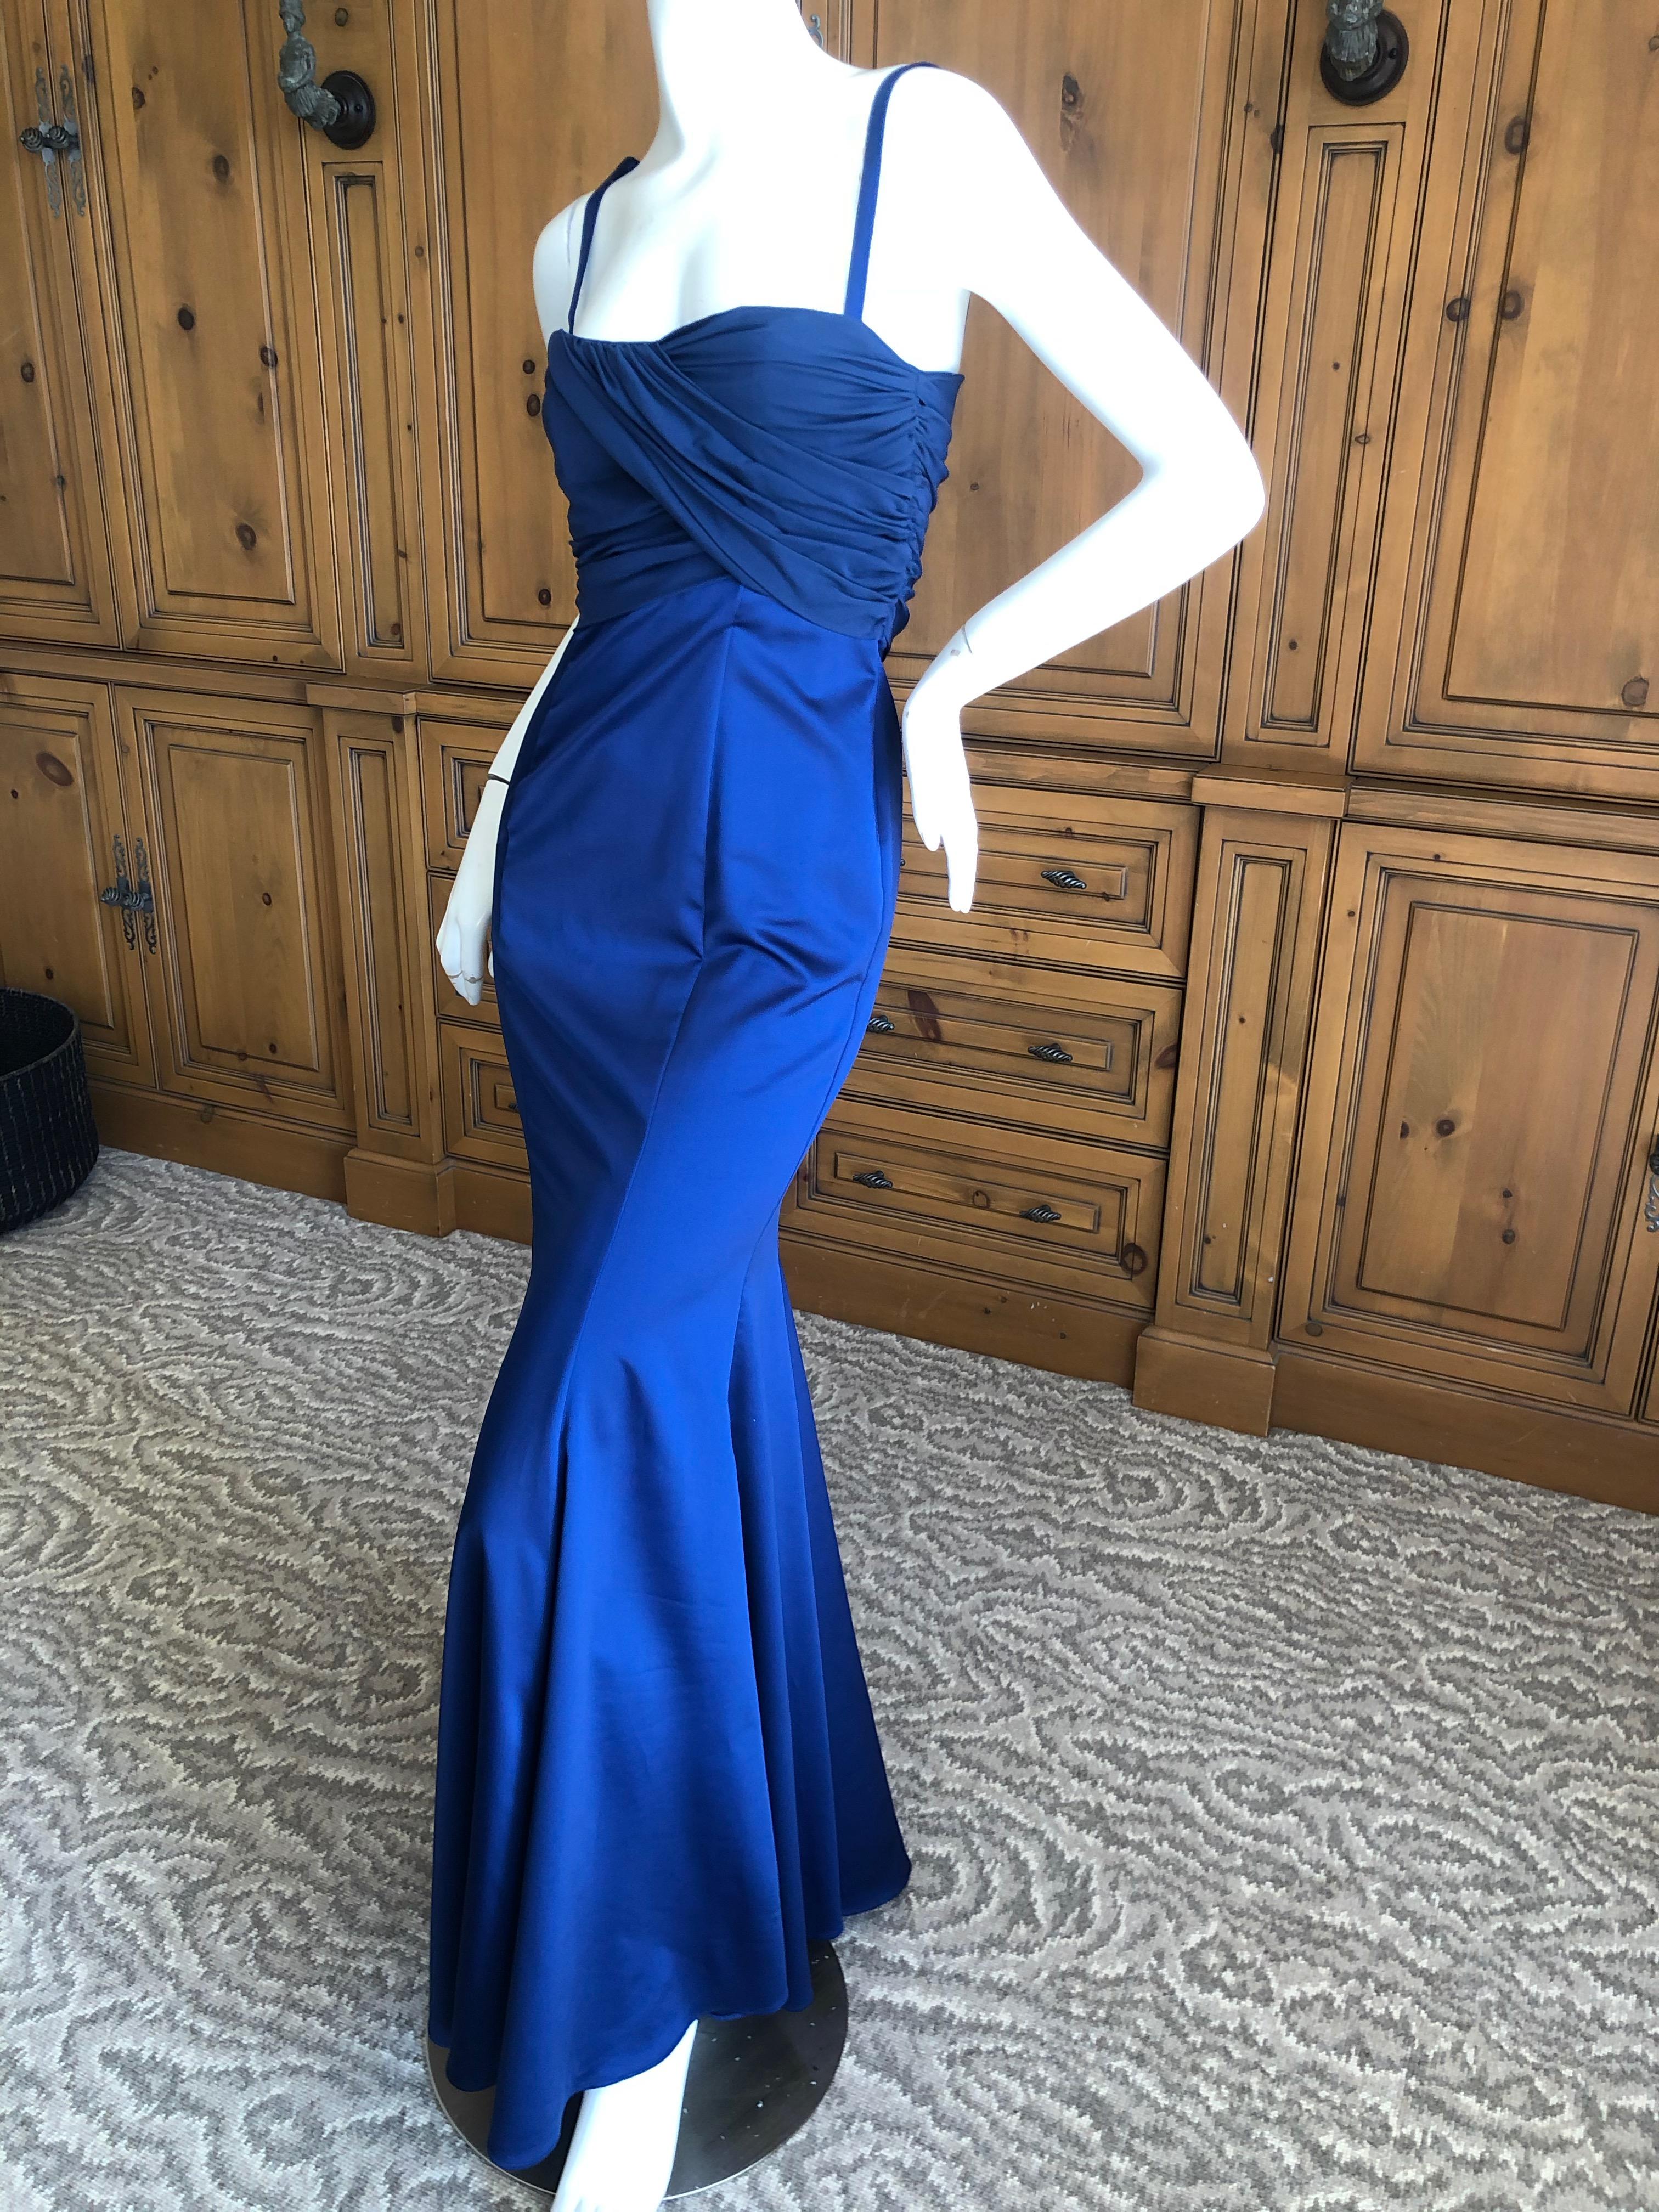  Roberto Cavalli for Just Cavalli Elegant Midnight Blue Evening Dress For Sale 3